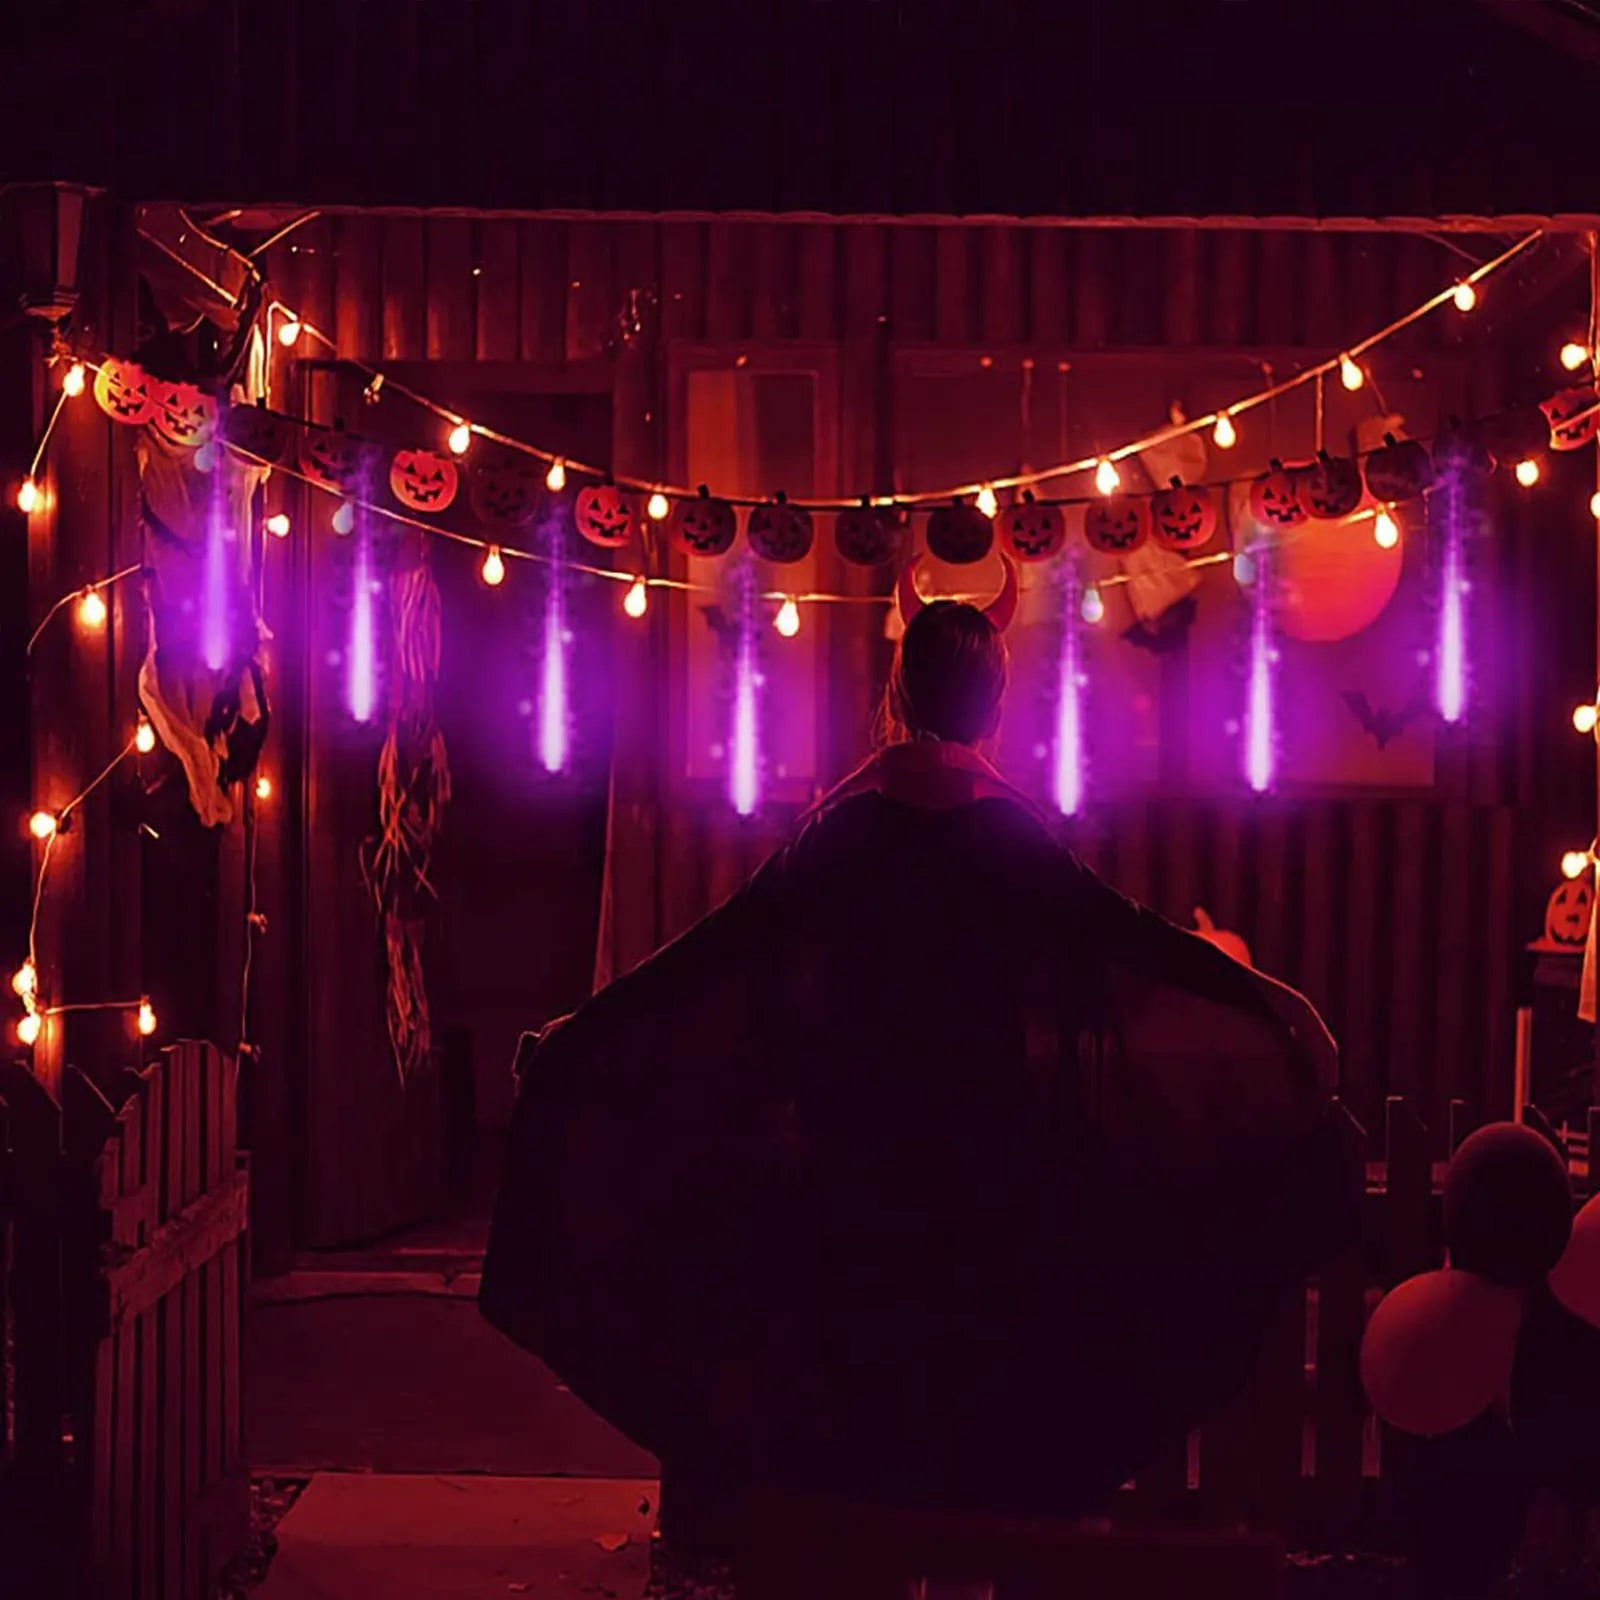 Outdoor Christmas Lights, Kwaiffeo Meteor Shower Lights 12 inch 8 Tube 192 LED